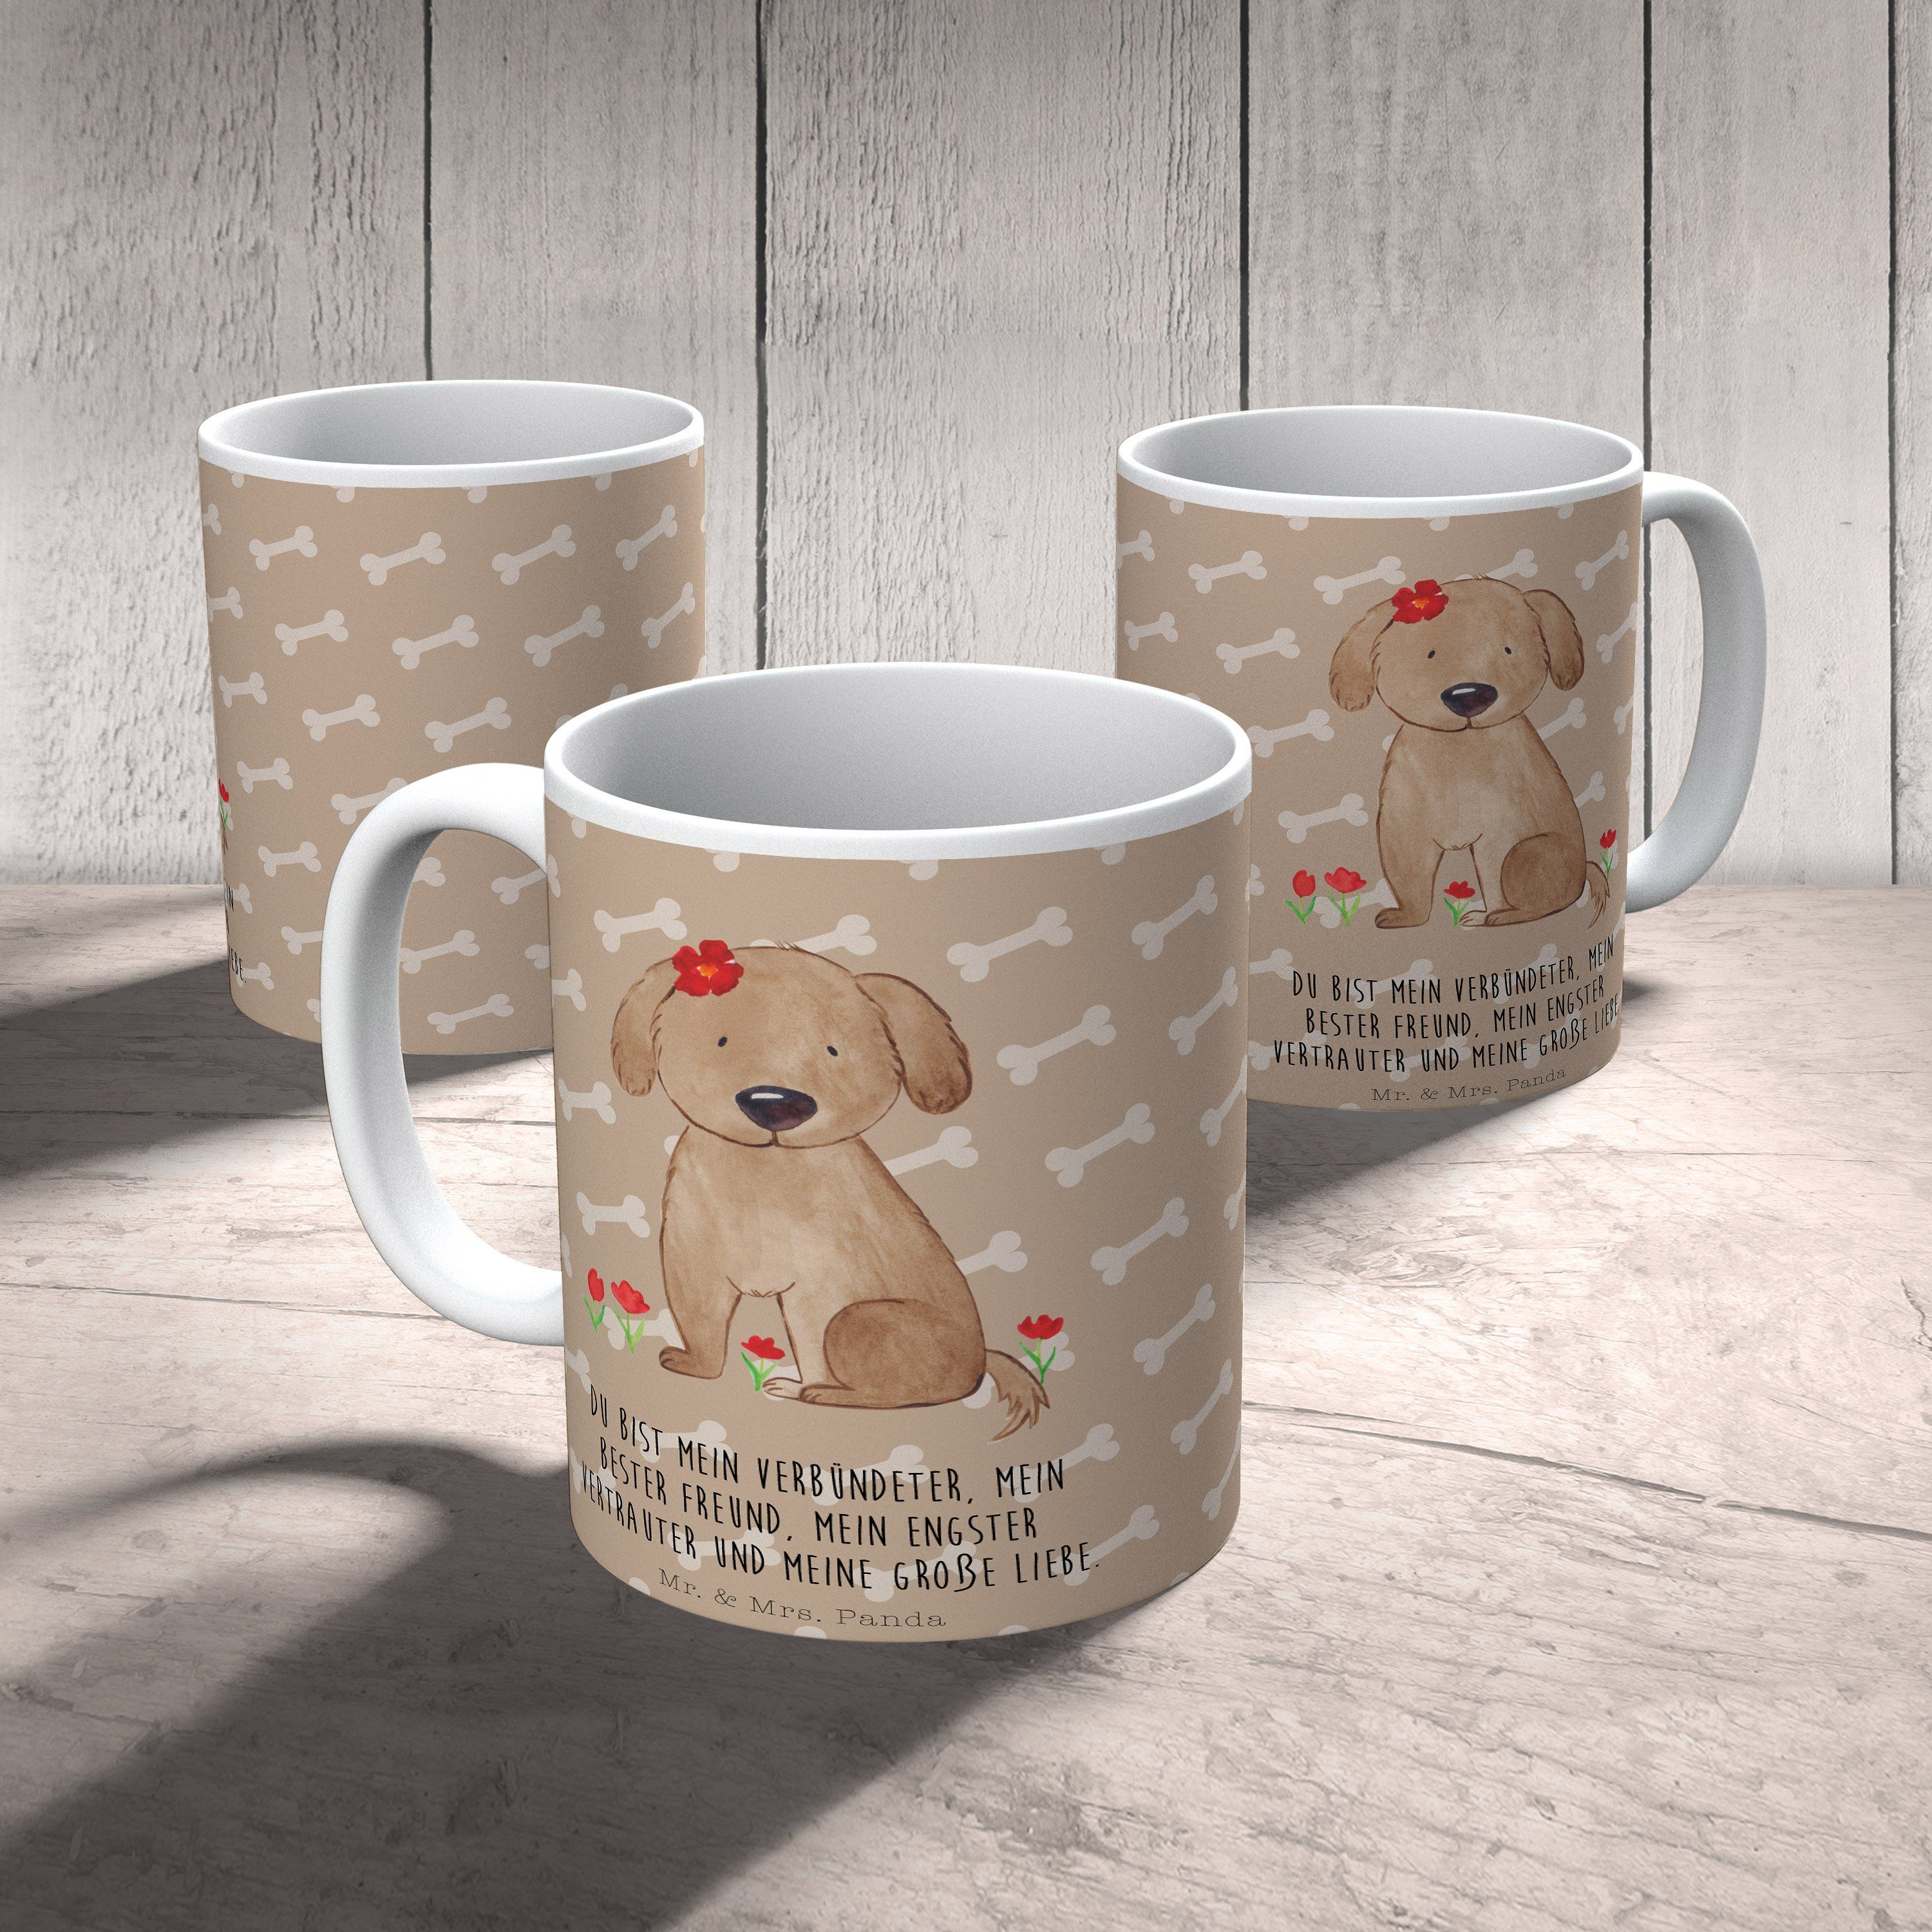 Mr. & Mrs. Panda - Hundedame - Geschenk, Teetasse, Tasse Keramik Tasse, Hau, Hund Hundeglück Sprüche